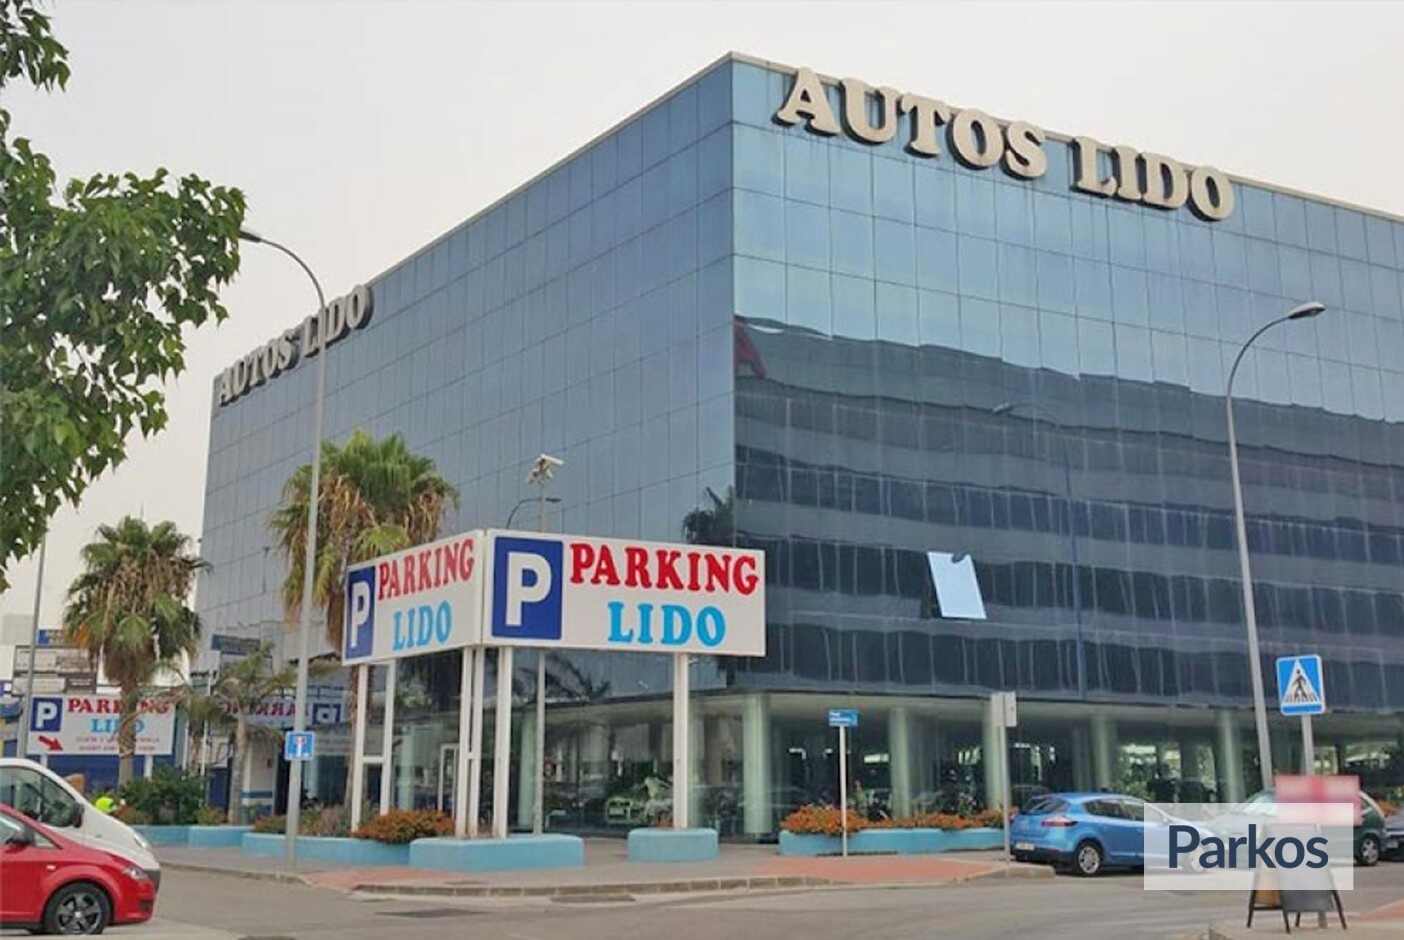 Parking Lido (Paga en el parking) - Parking Airport Malaga - picture 1